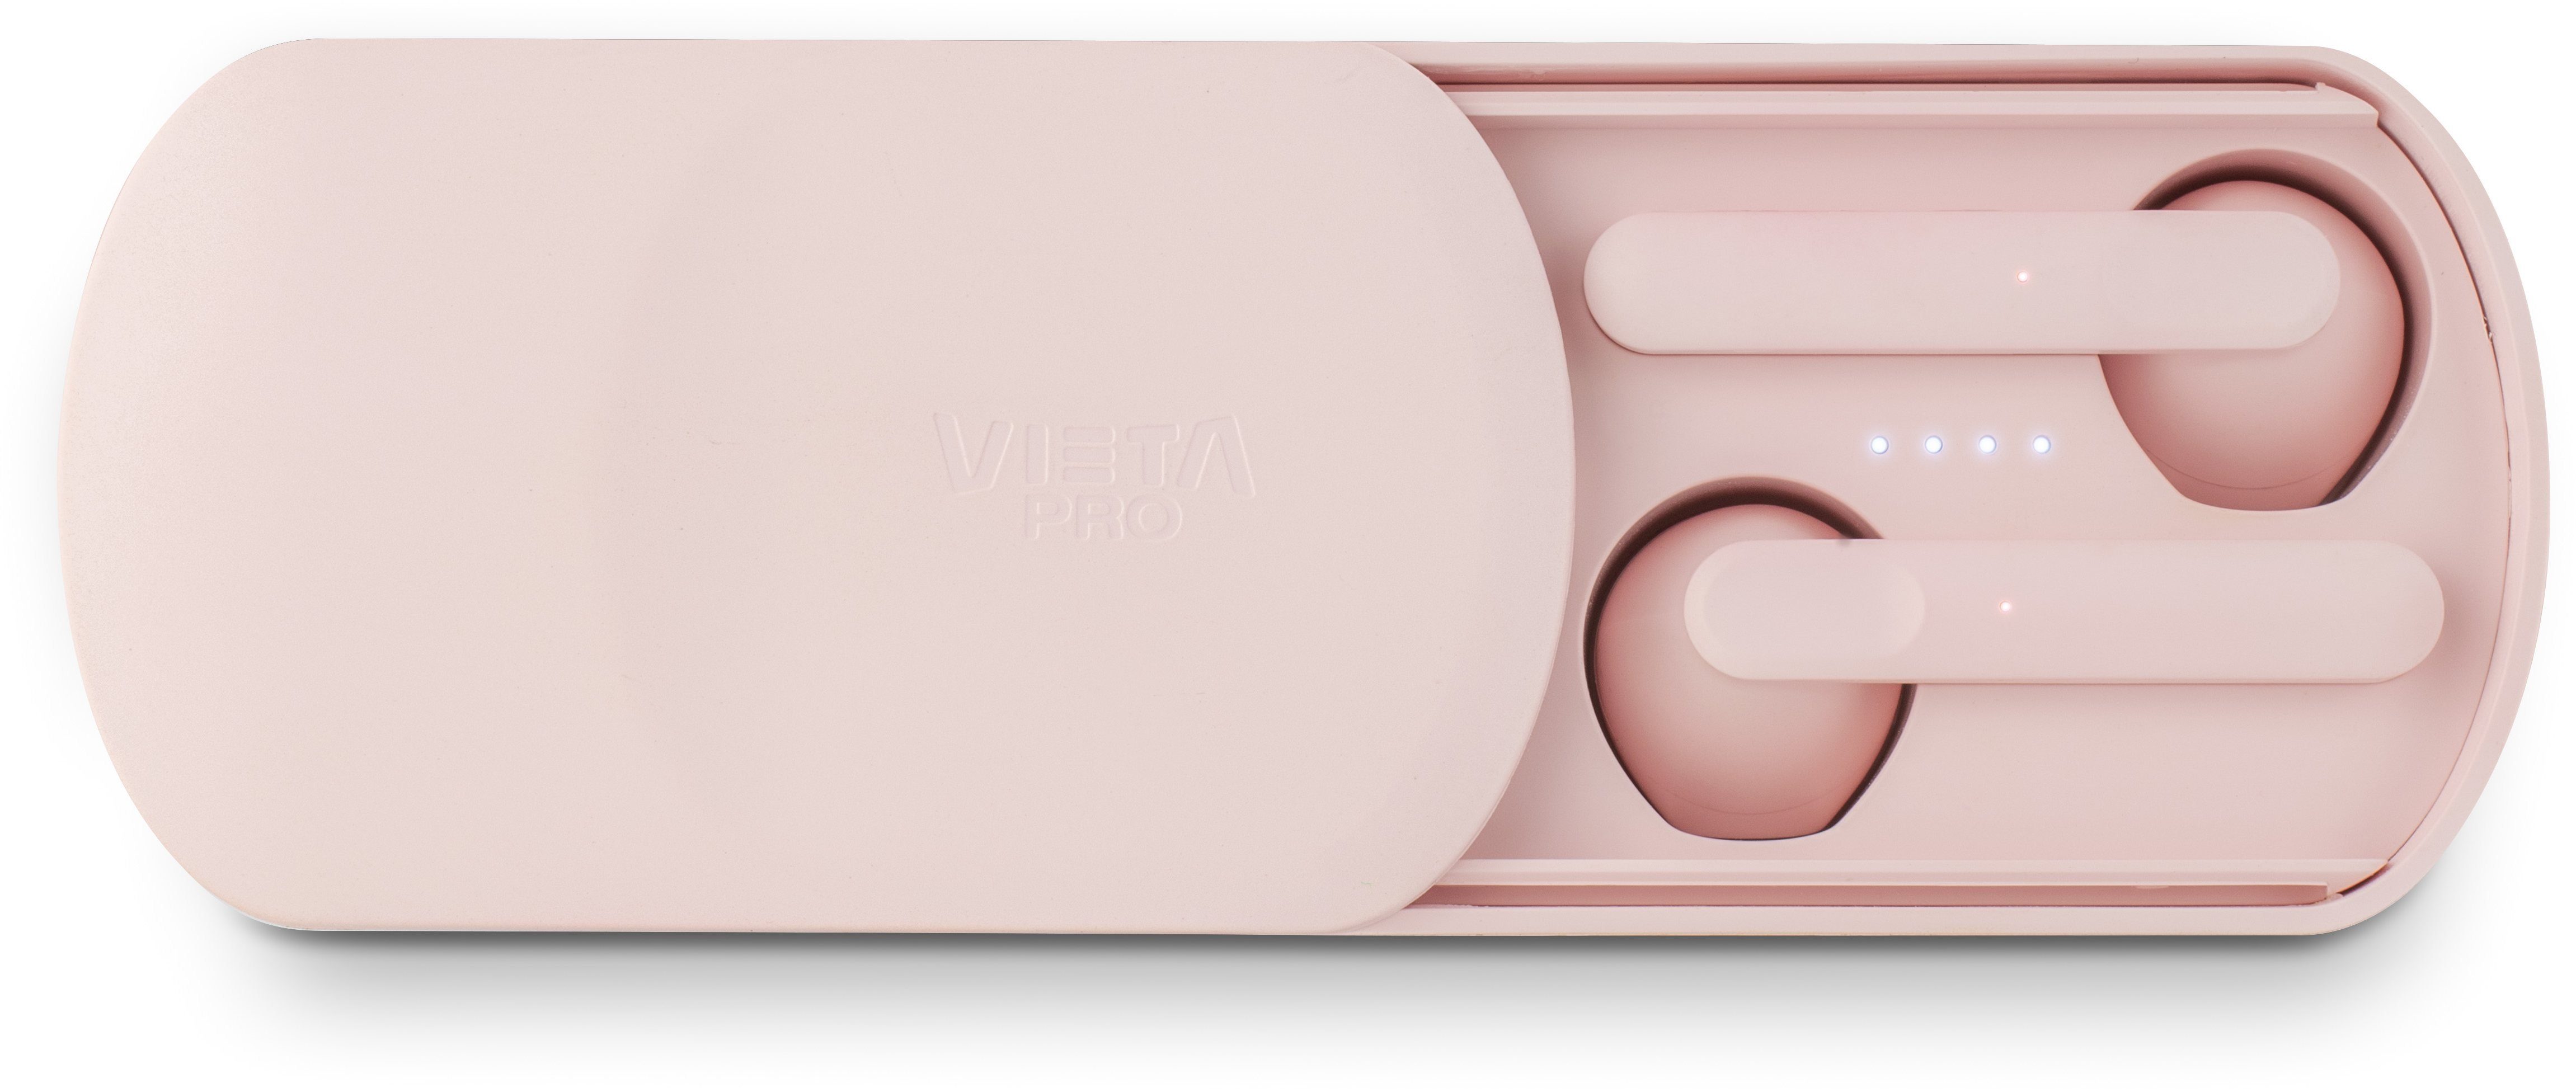 Headphones Pro True #ENJOY Vieta Pink Wireless Kopfhörer wireless